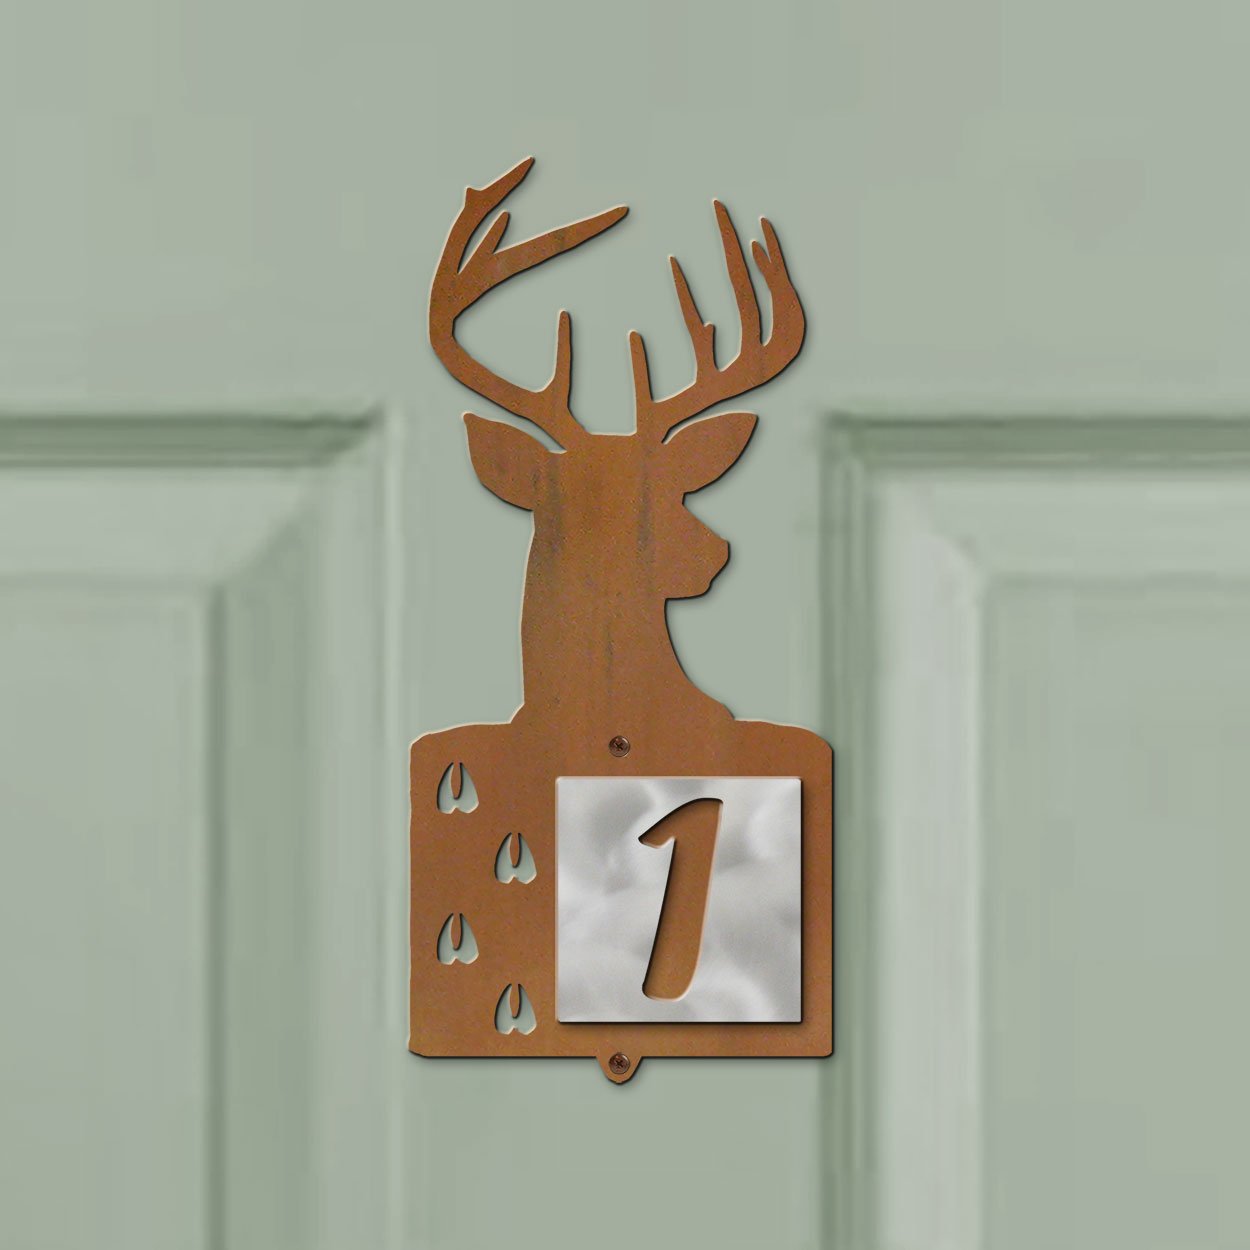 606121 - Deer Tracks Design One-Digit Rustic Tile Door Number